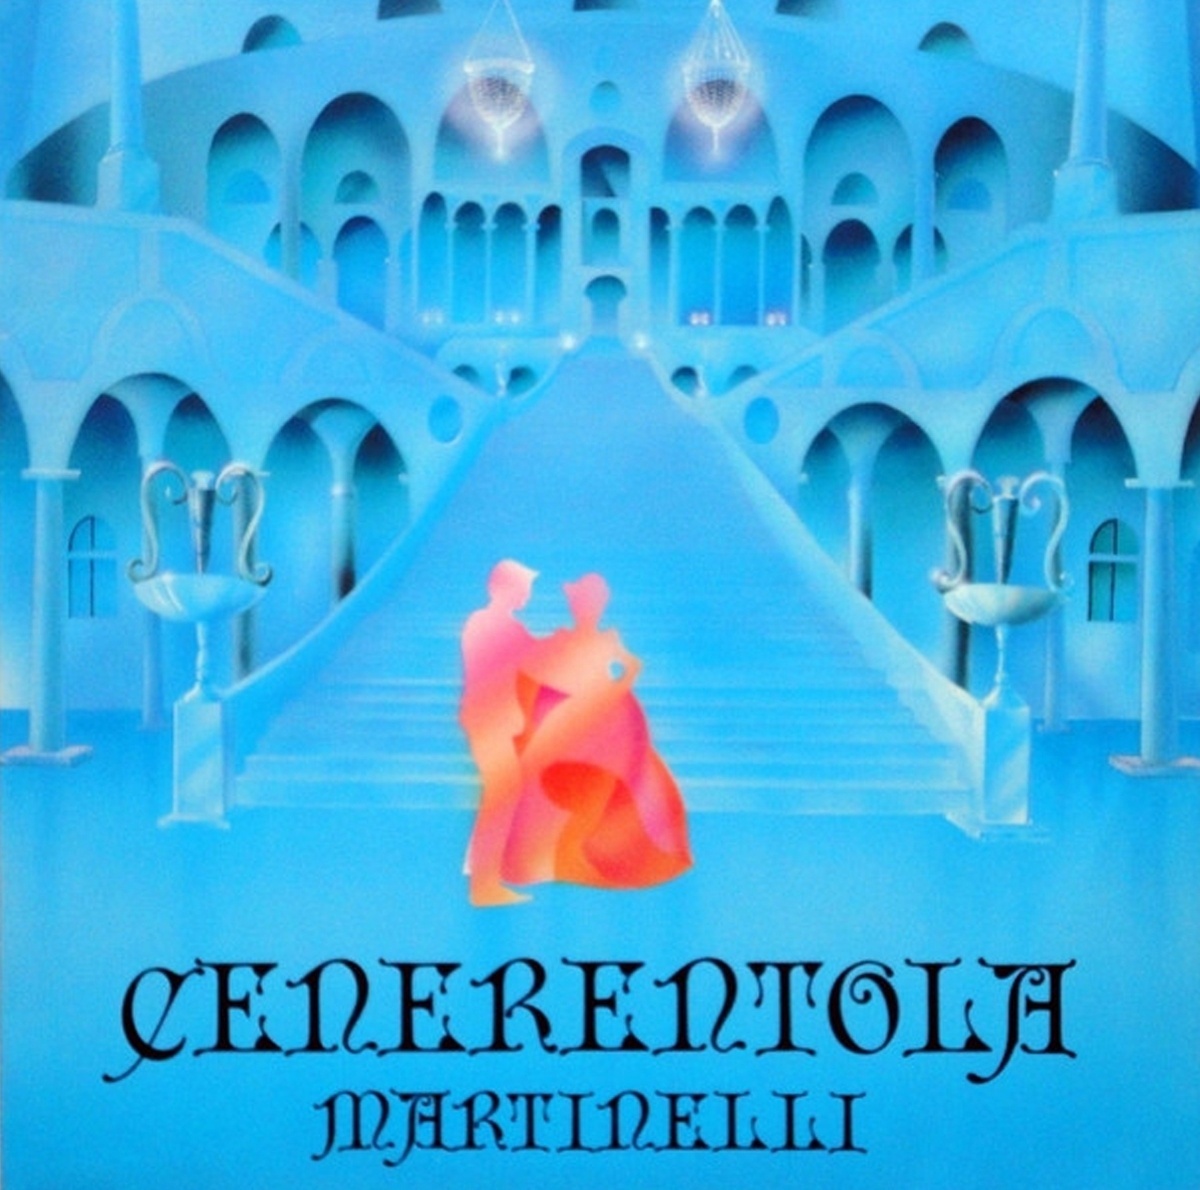 Cenerentola (Cinderella) - Martinelli. (LP)